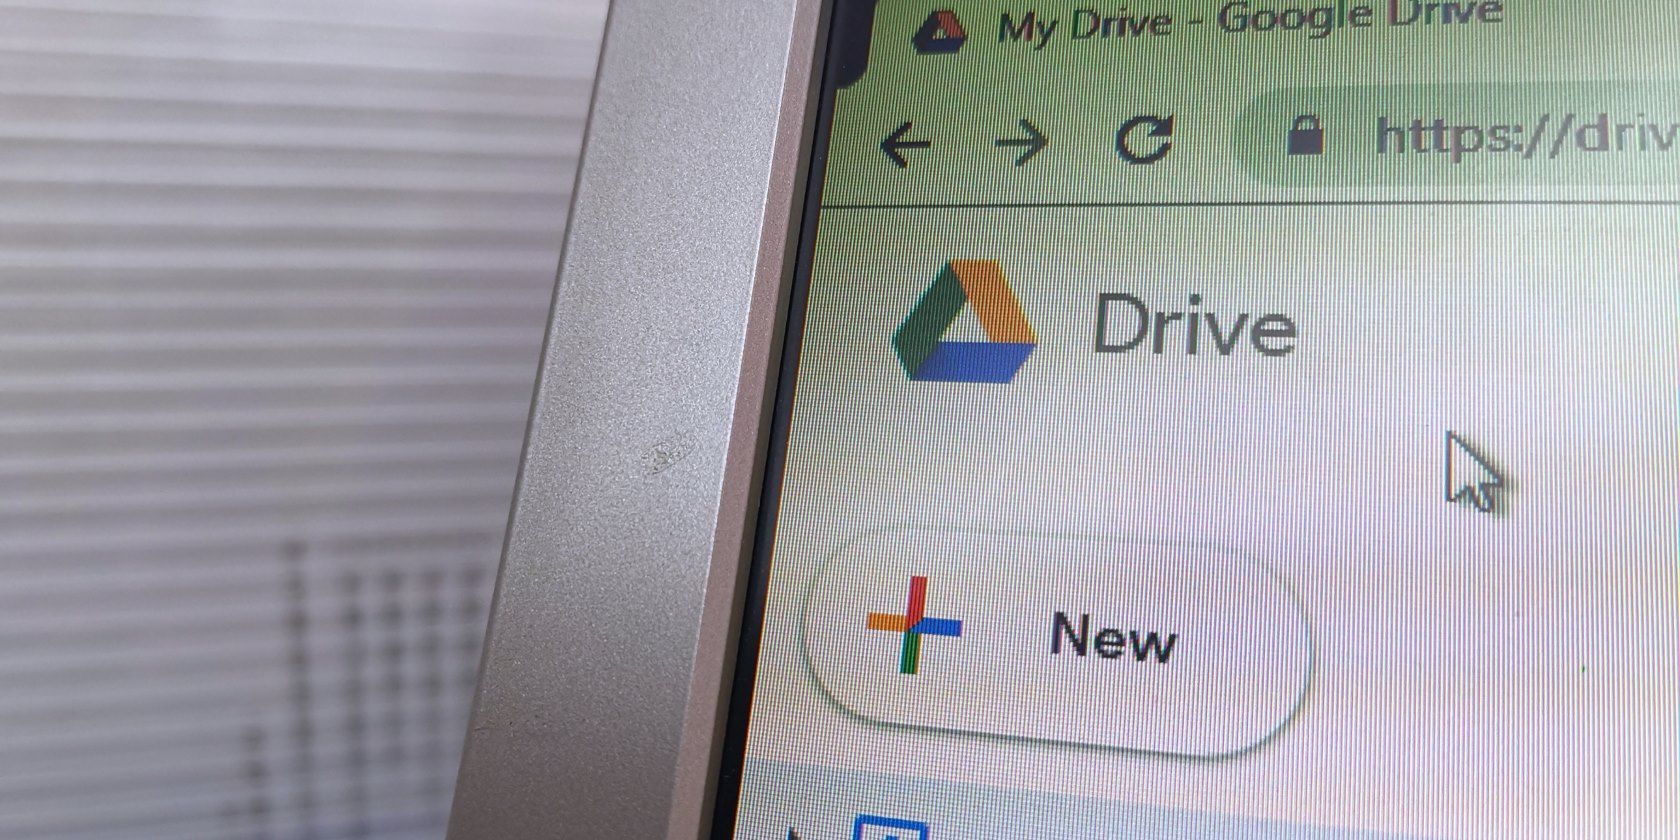 google drive download permission